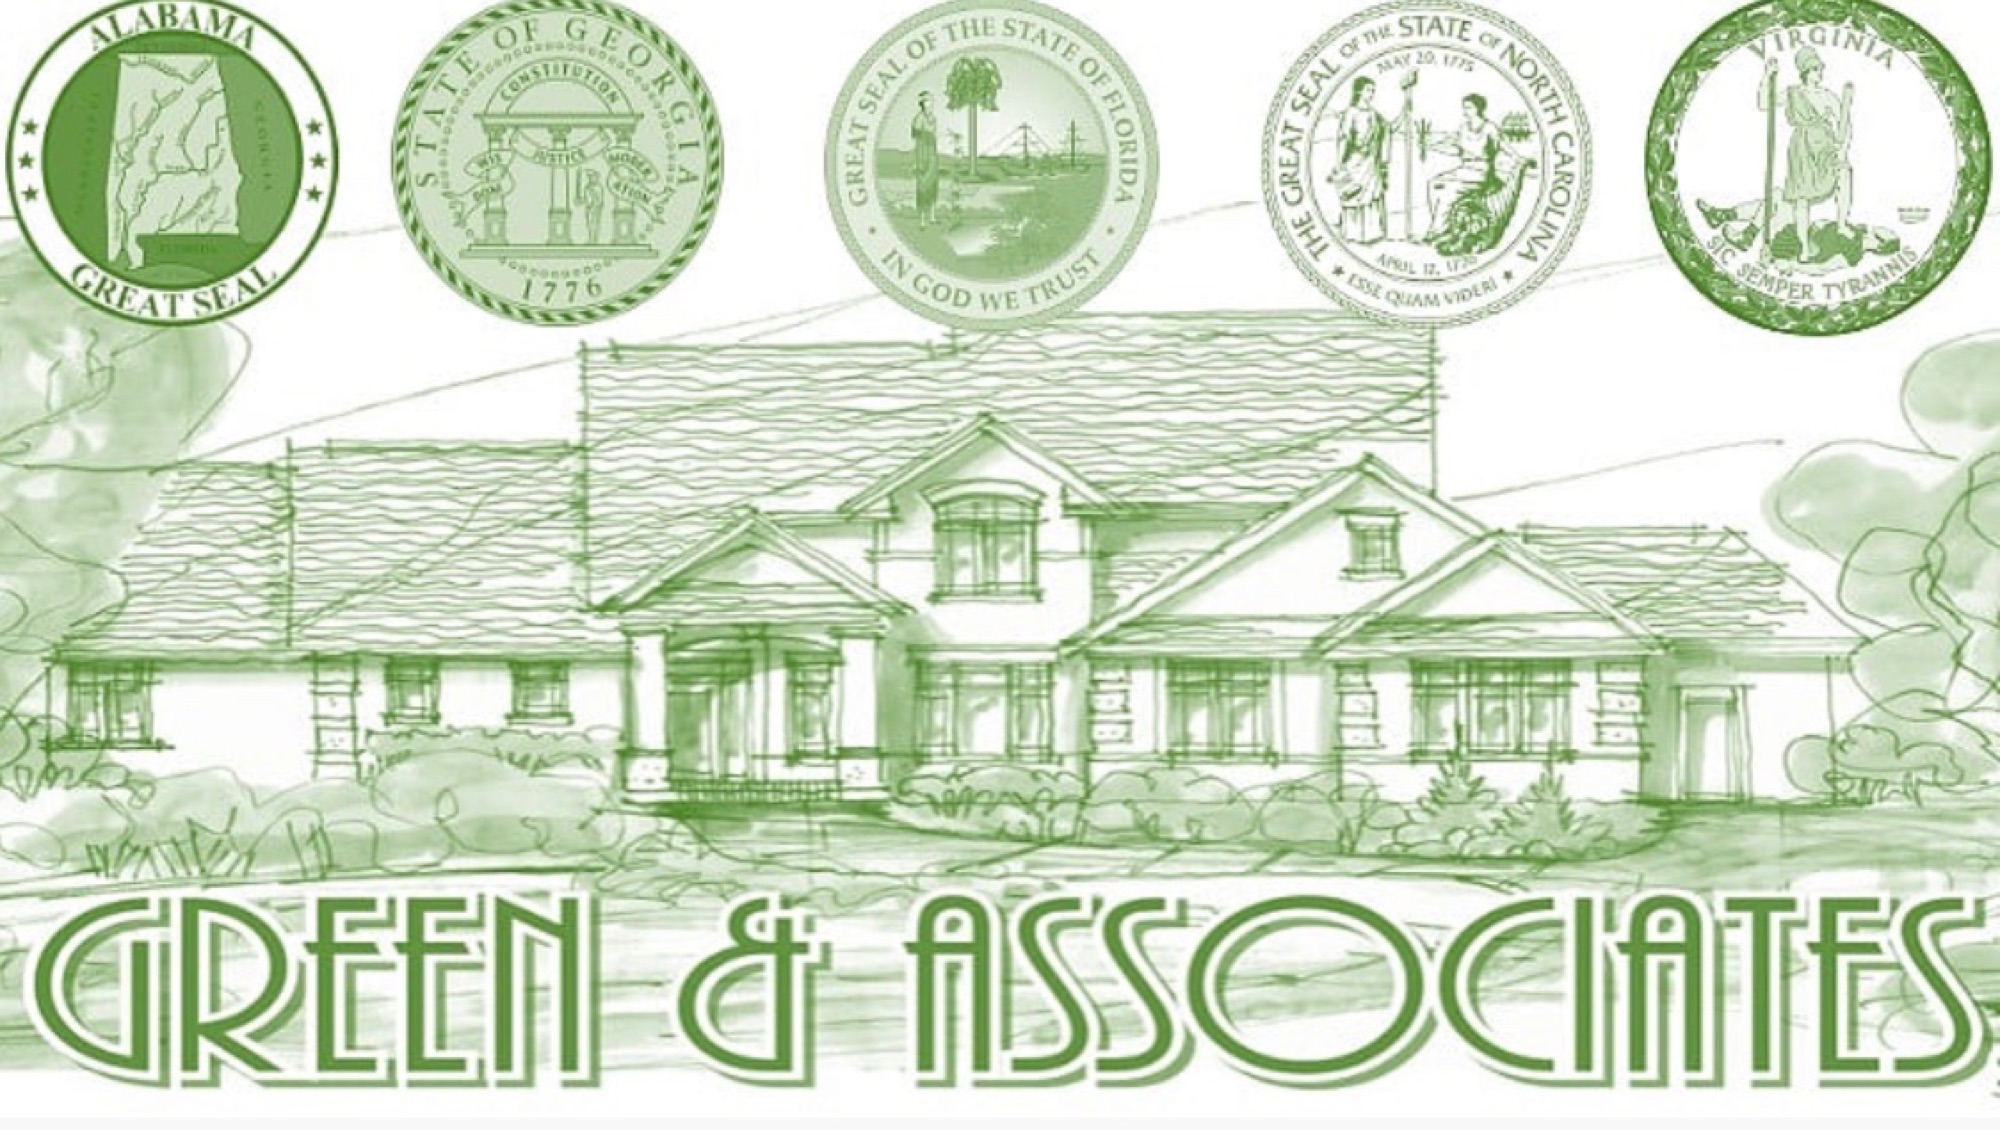 Green & Associates Logo